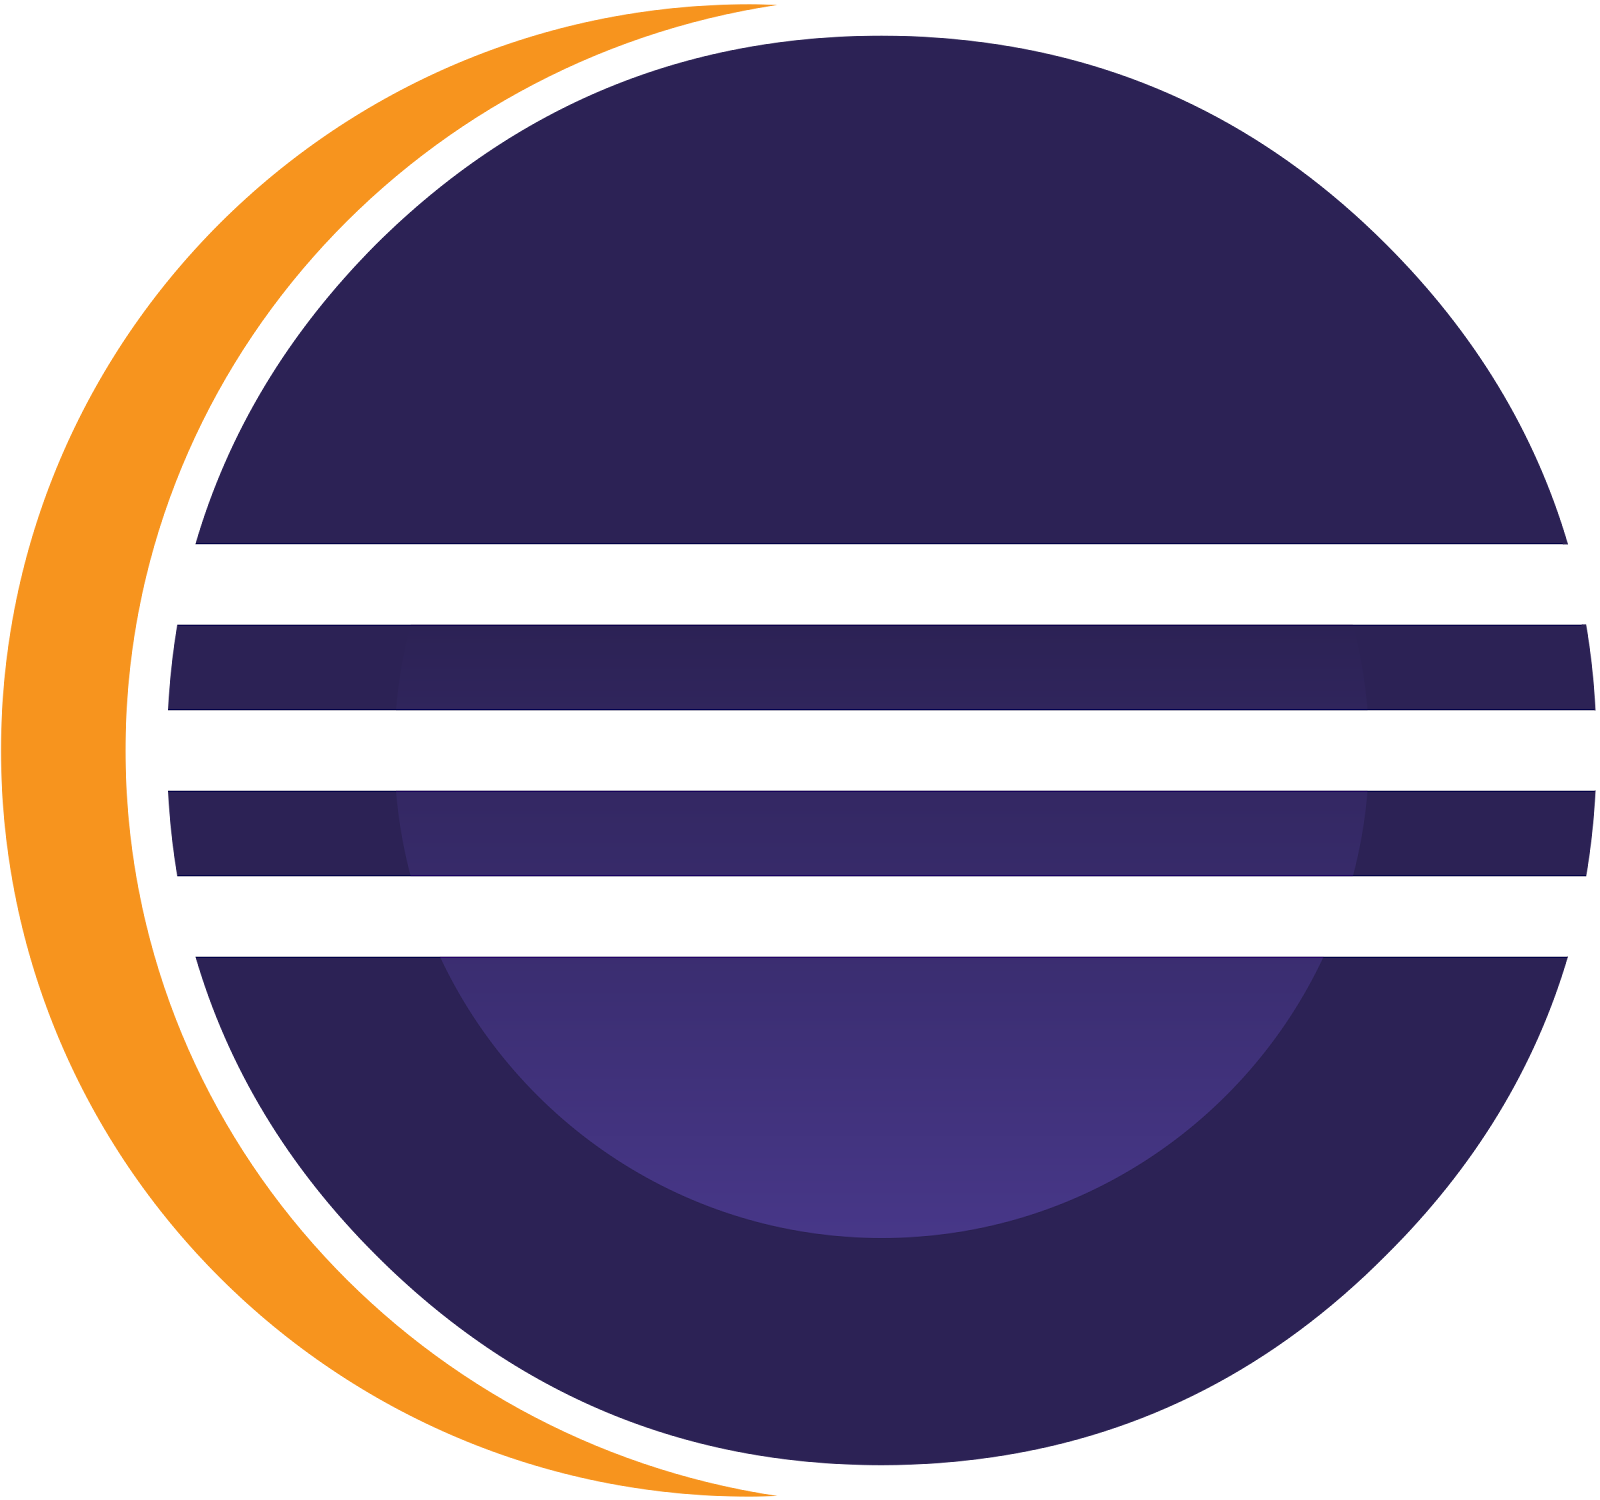 Eclipse Logo PNG Transparent &amp; SVG Vector - Freebie Supply